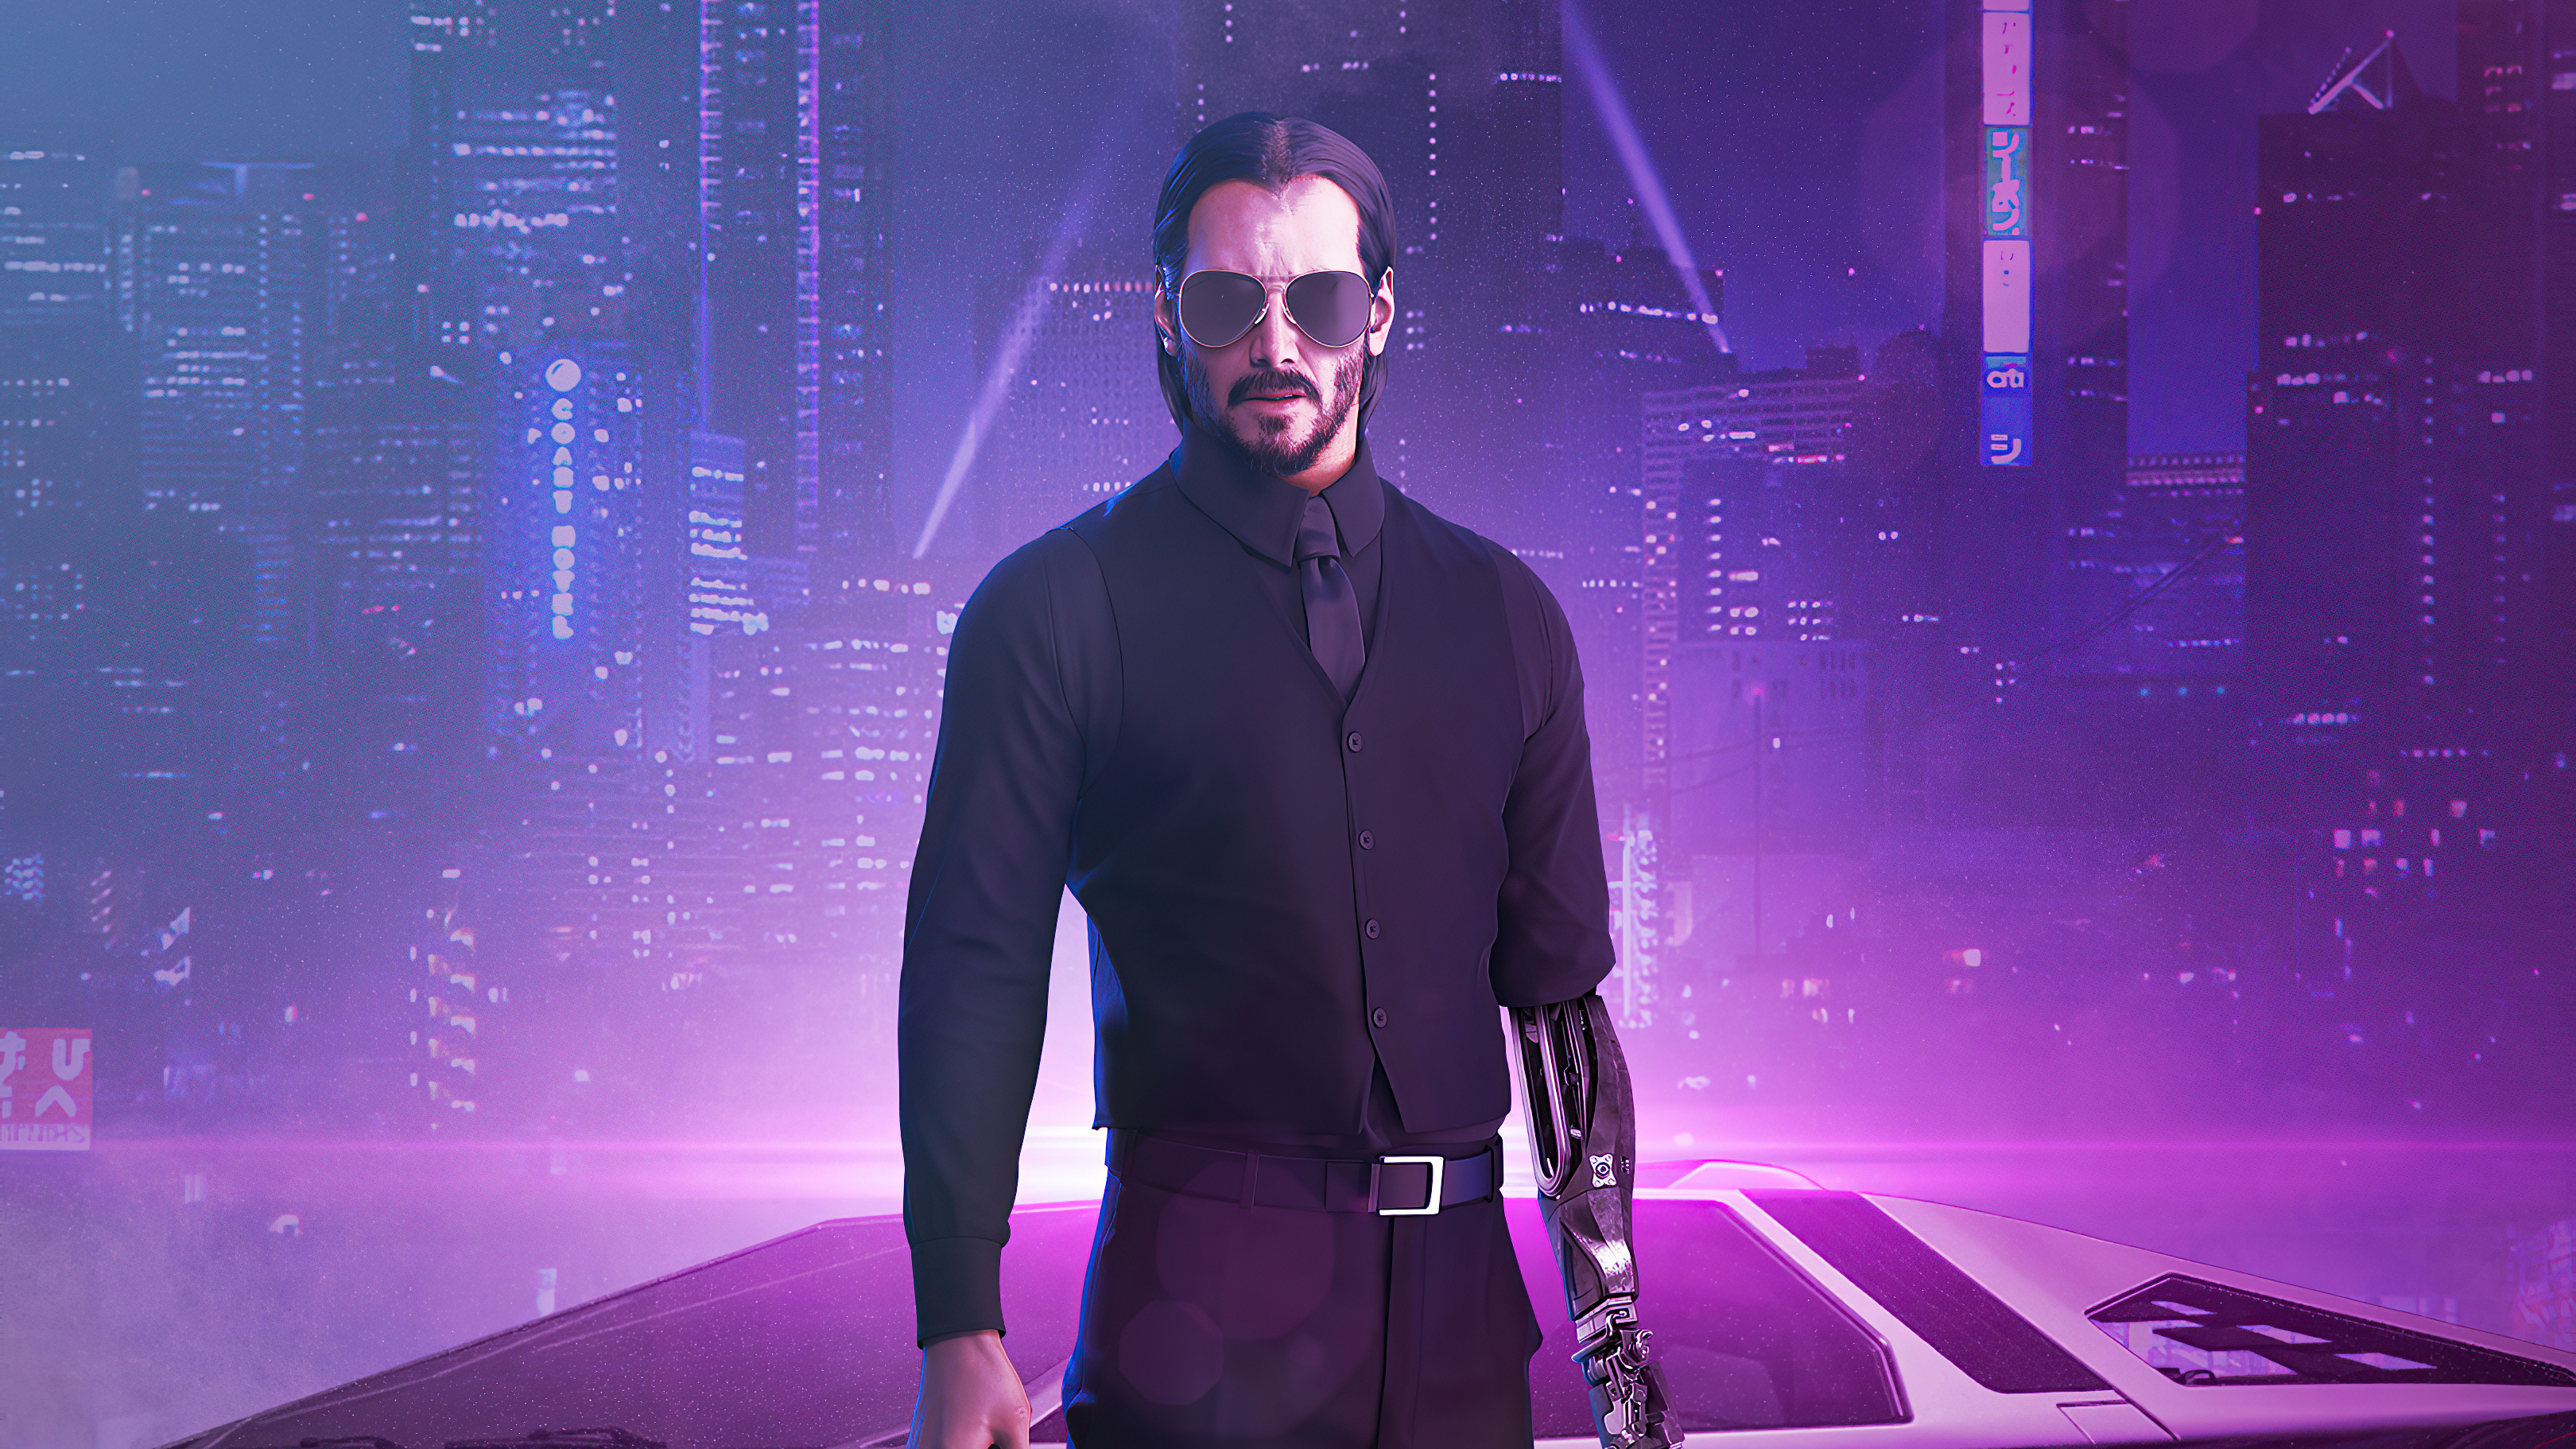 John Wick Cyberpunk 2077 Men Actor Keanu Reeves Video Games CD Projekt RED 3240x1822